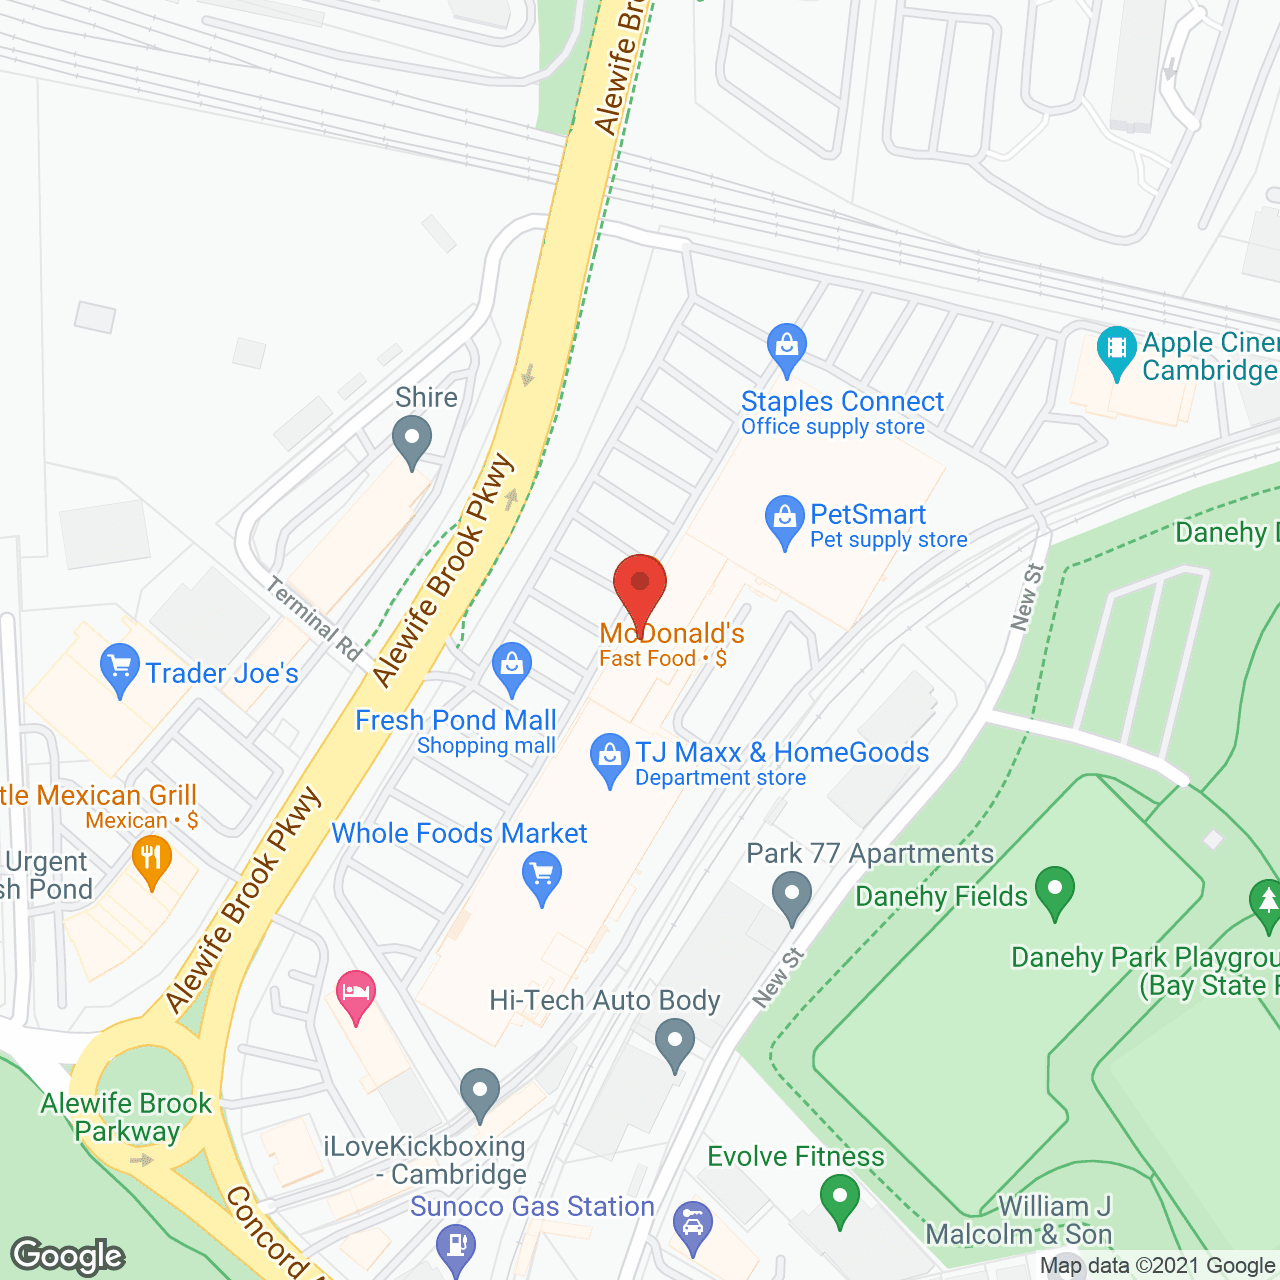 Cambridge VNA Network in google map